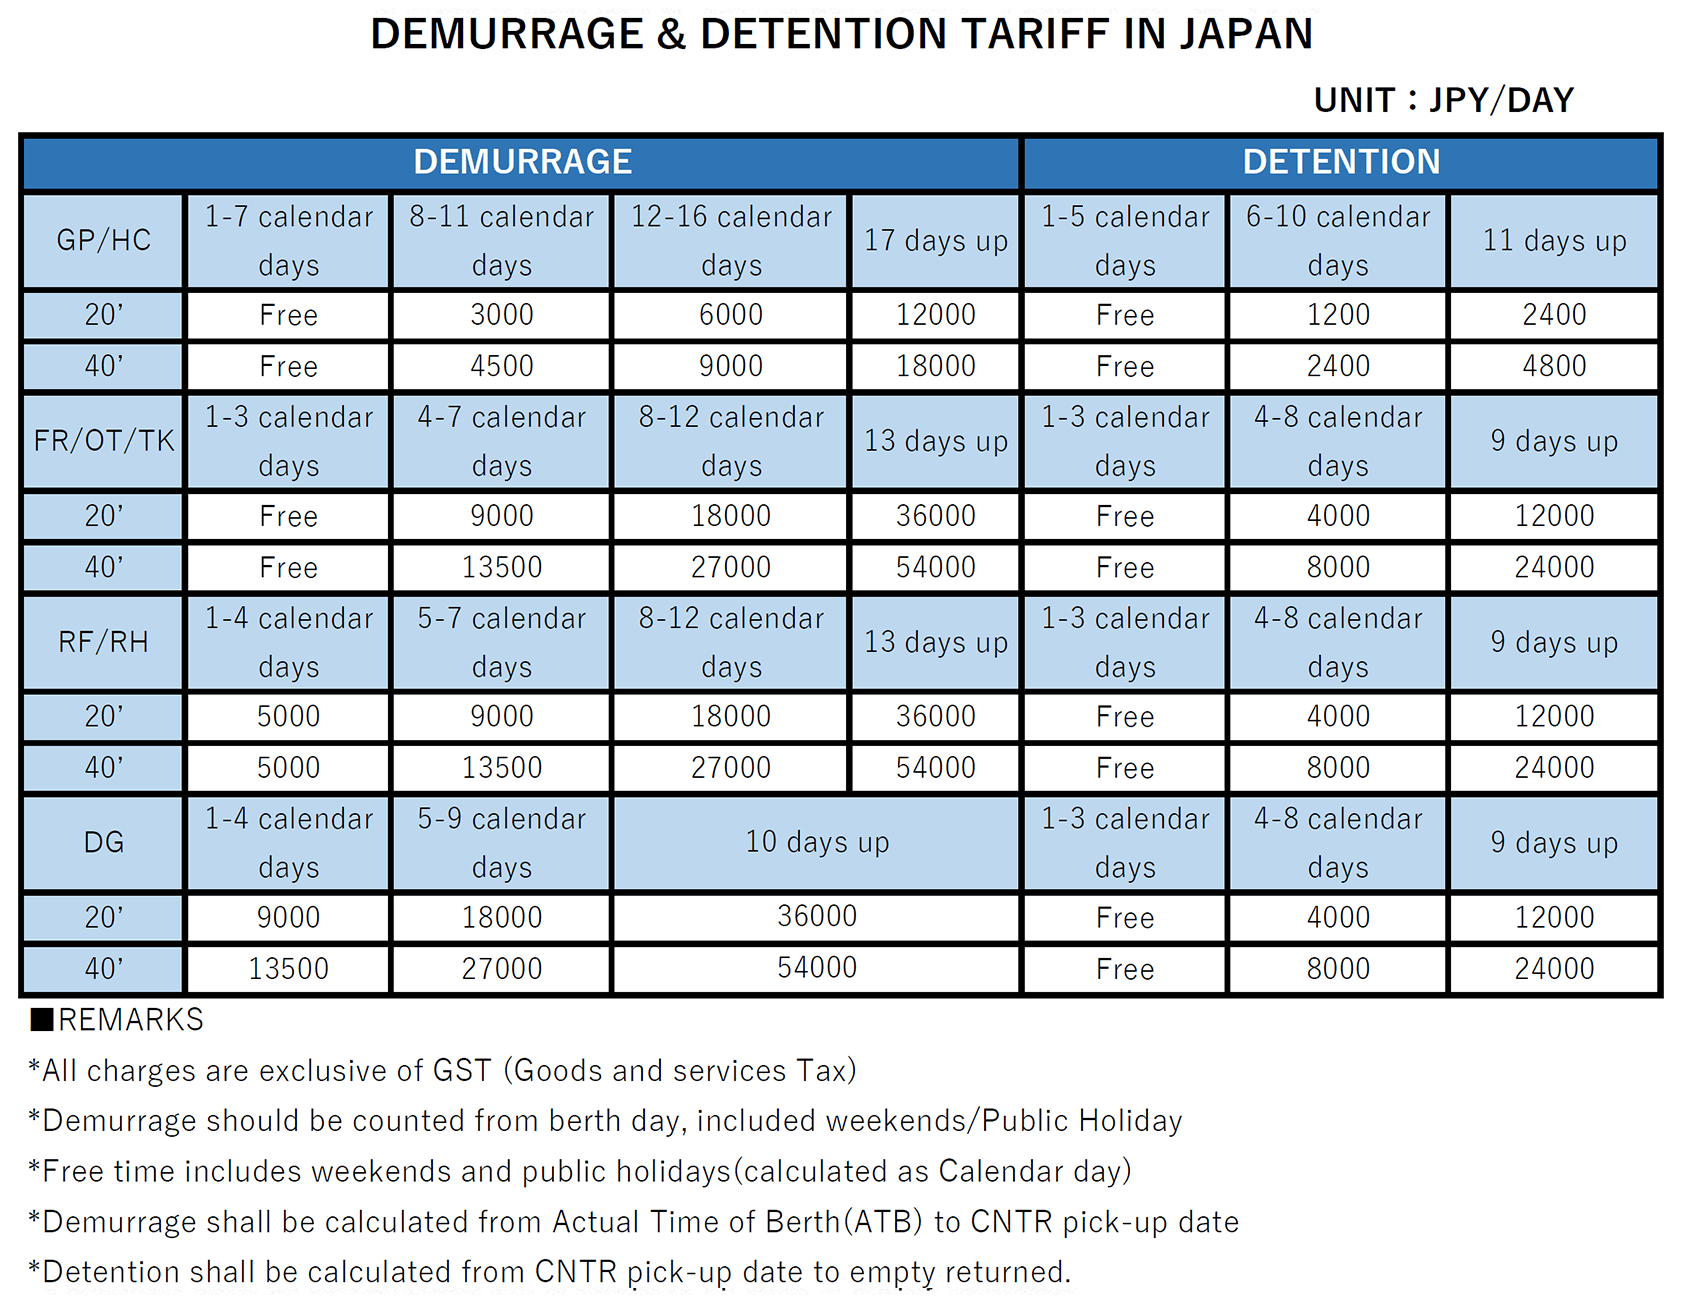 DEMURRAGE & DETENTION TARIFF IN JAPAN